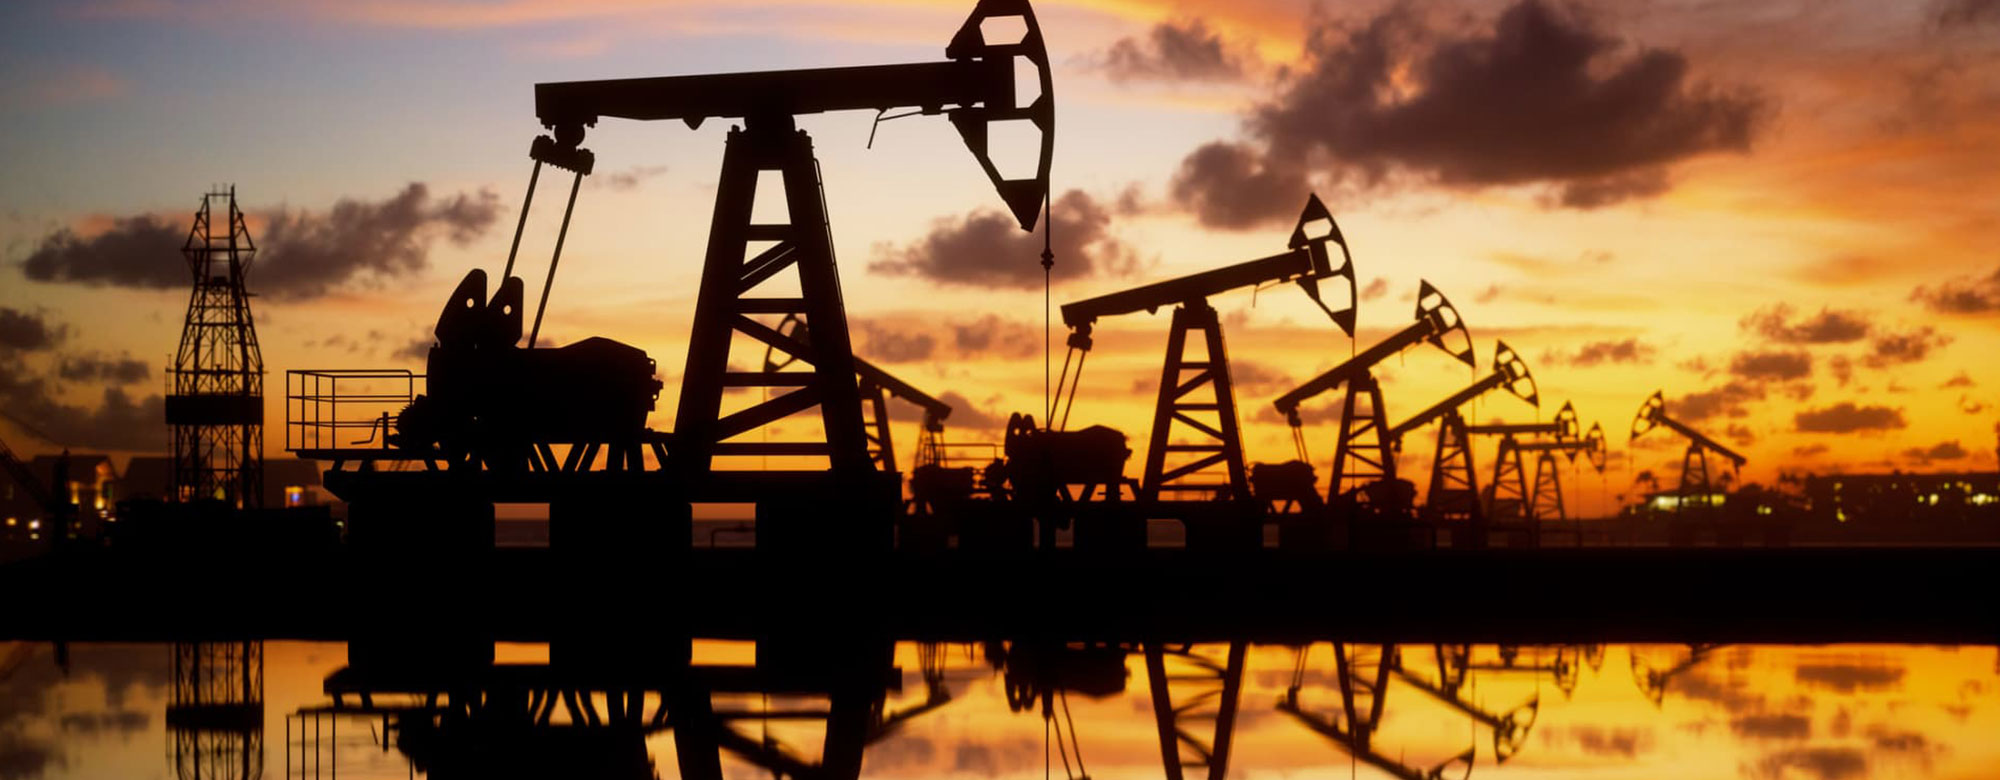 Oil and energy news